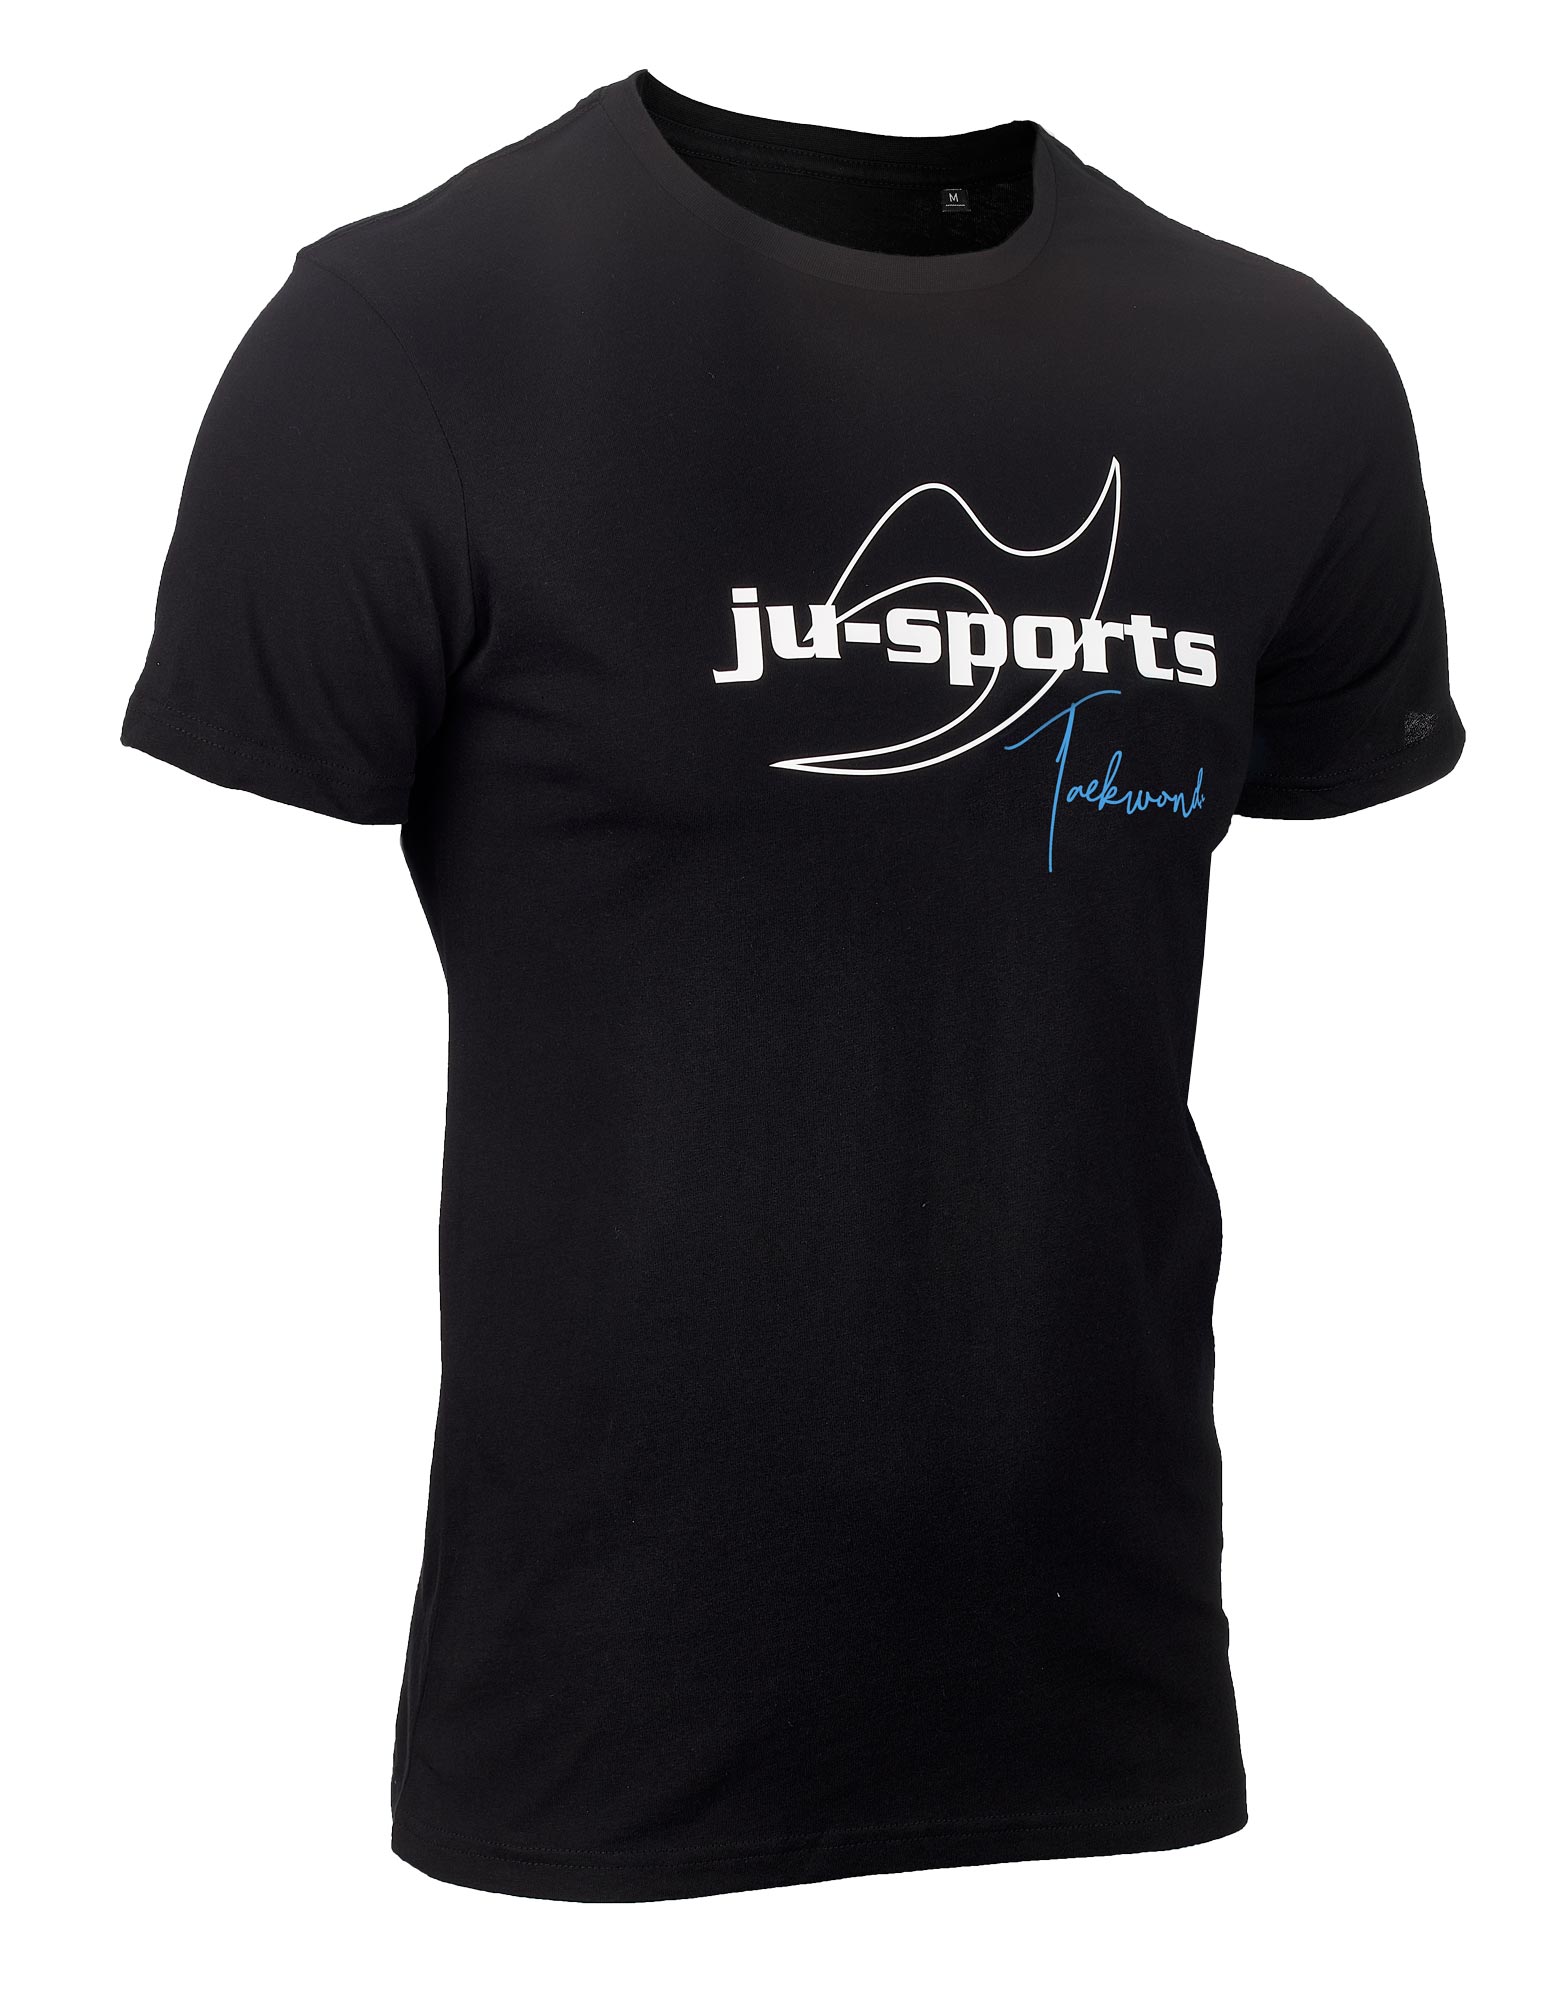 Ju-Sports Signature Line "Taekwondo" T-Shirt